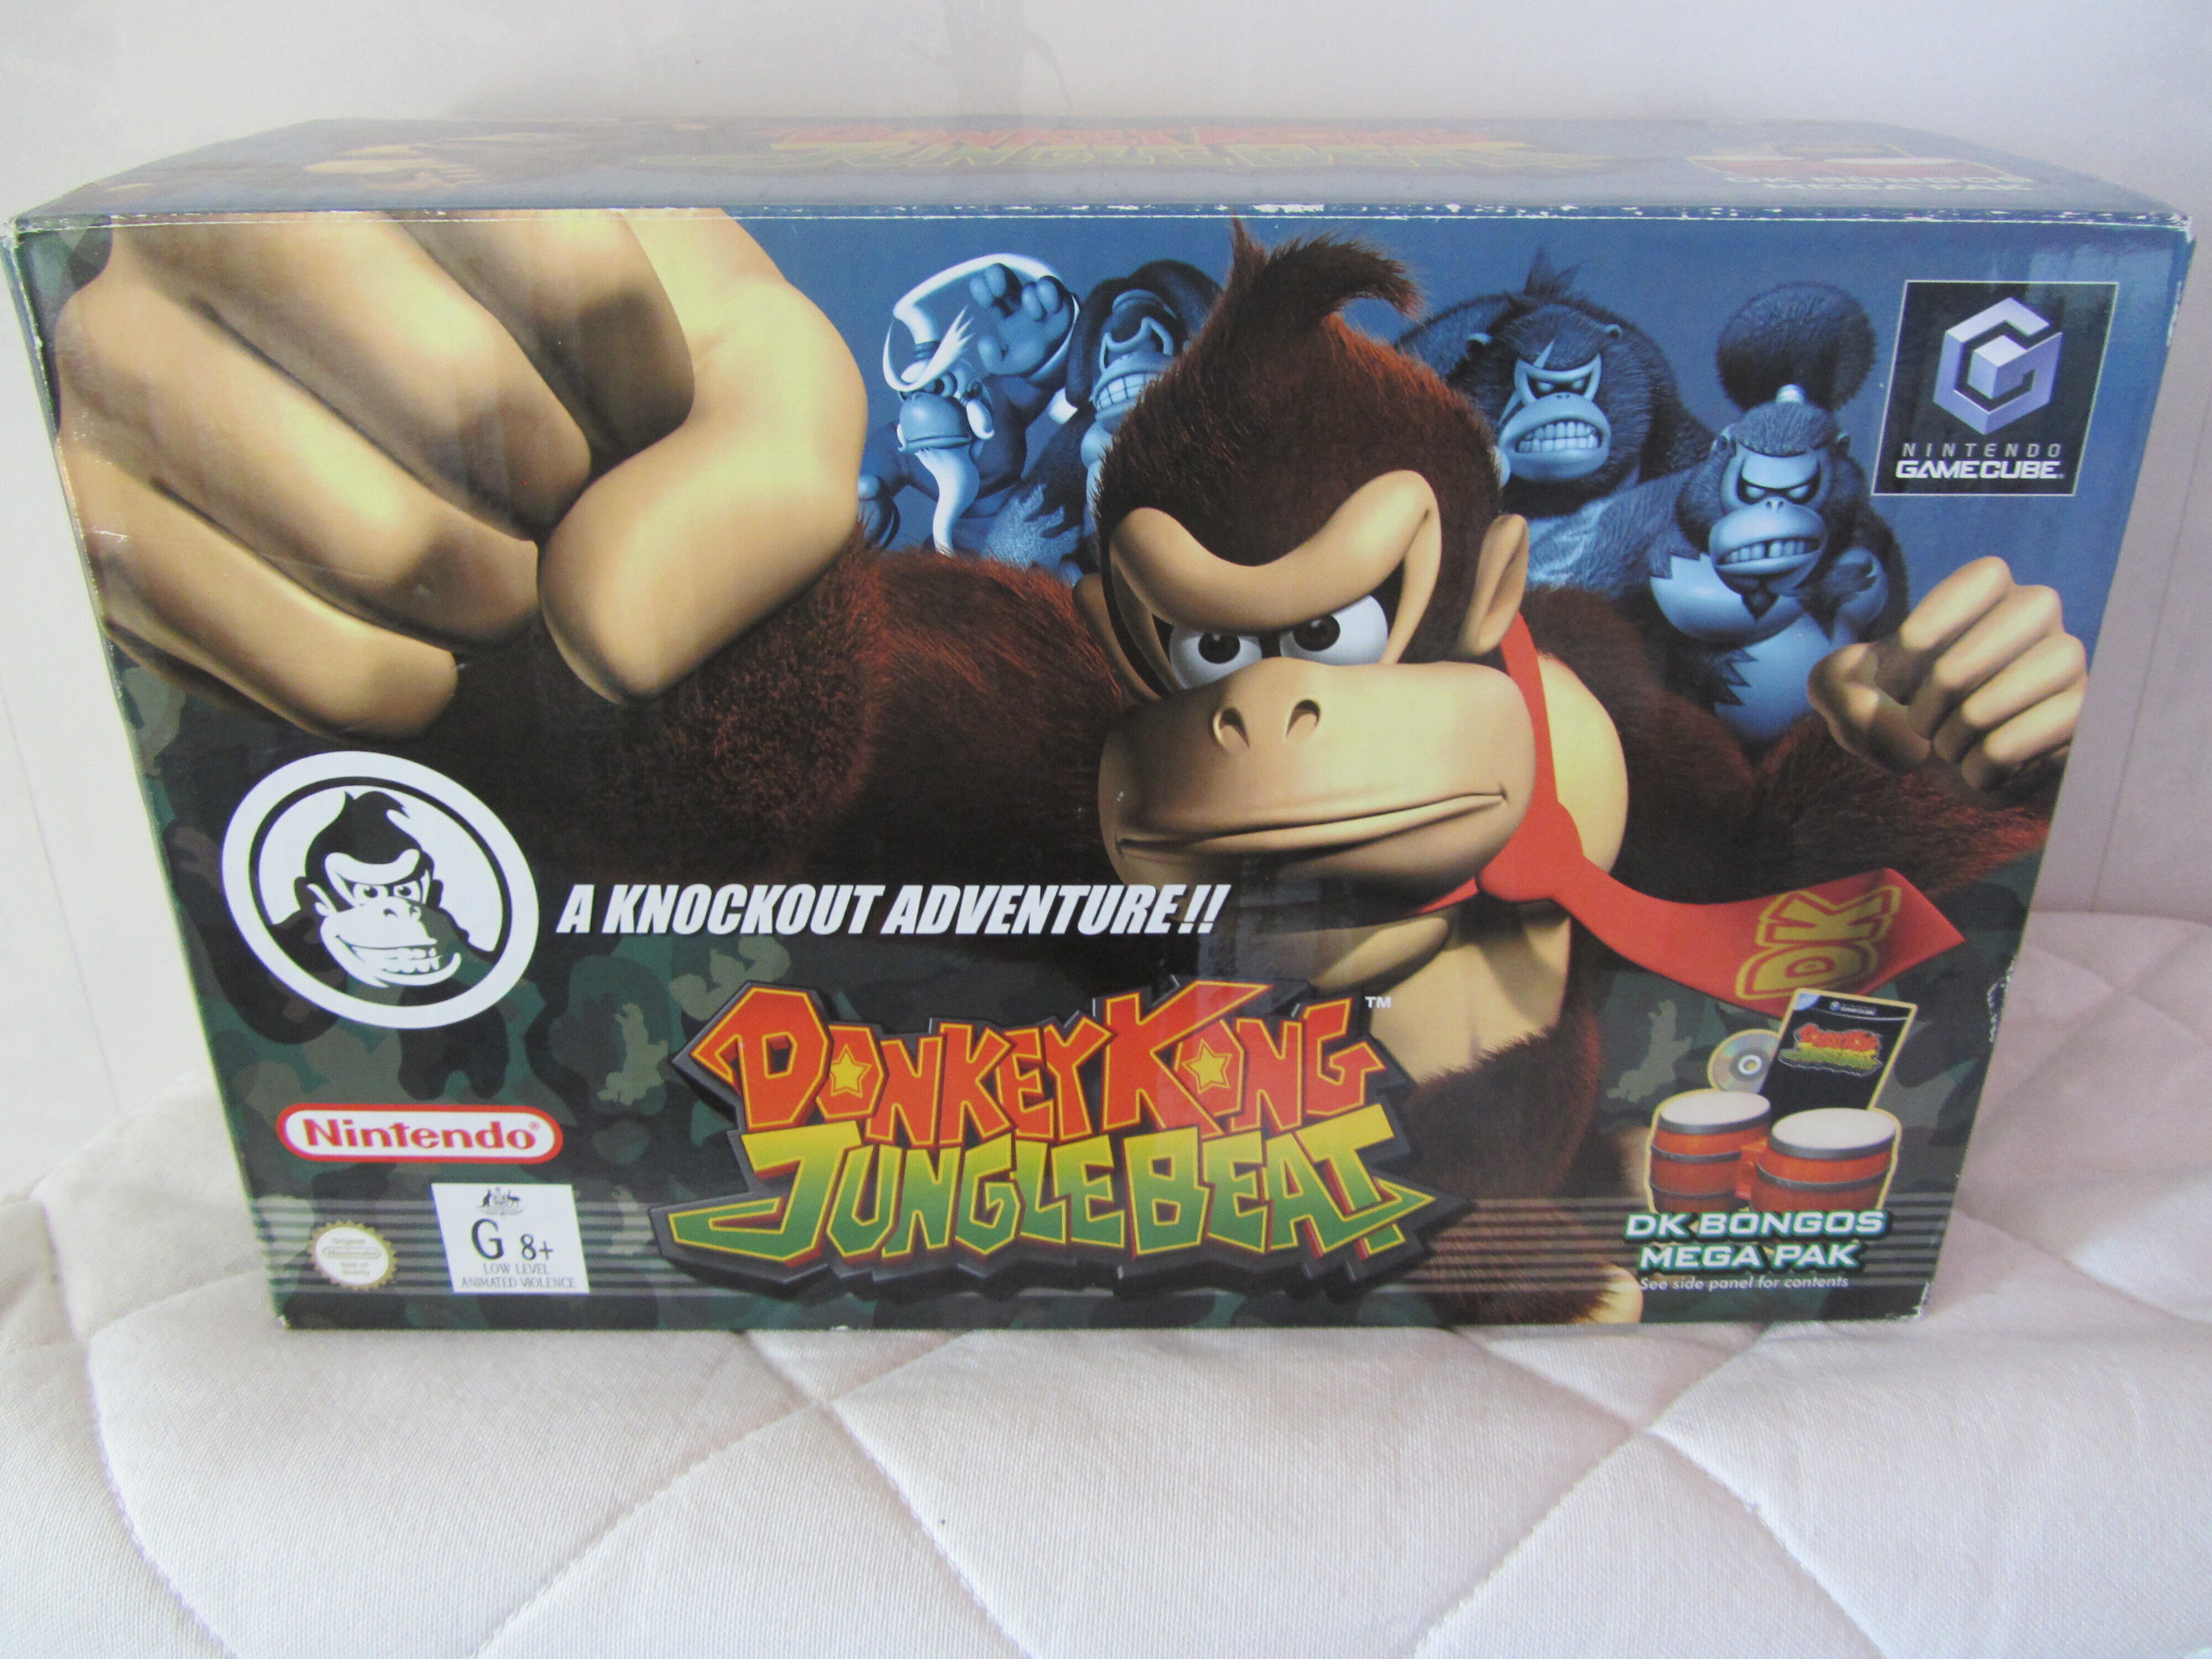  Gamecube Donkey Kong Jungle Beat Bongos Bundle [AUS]